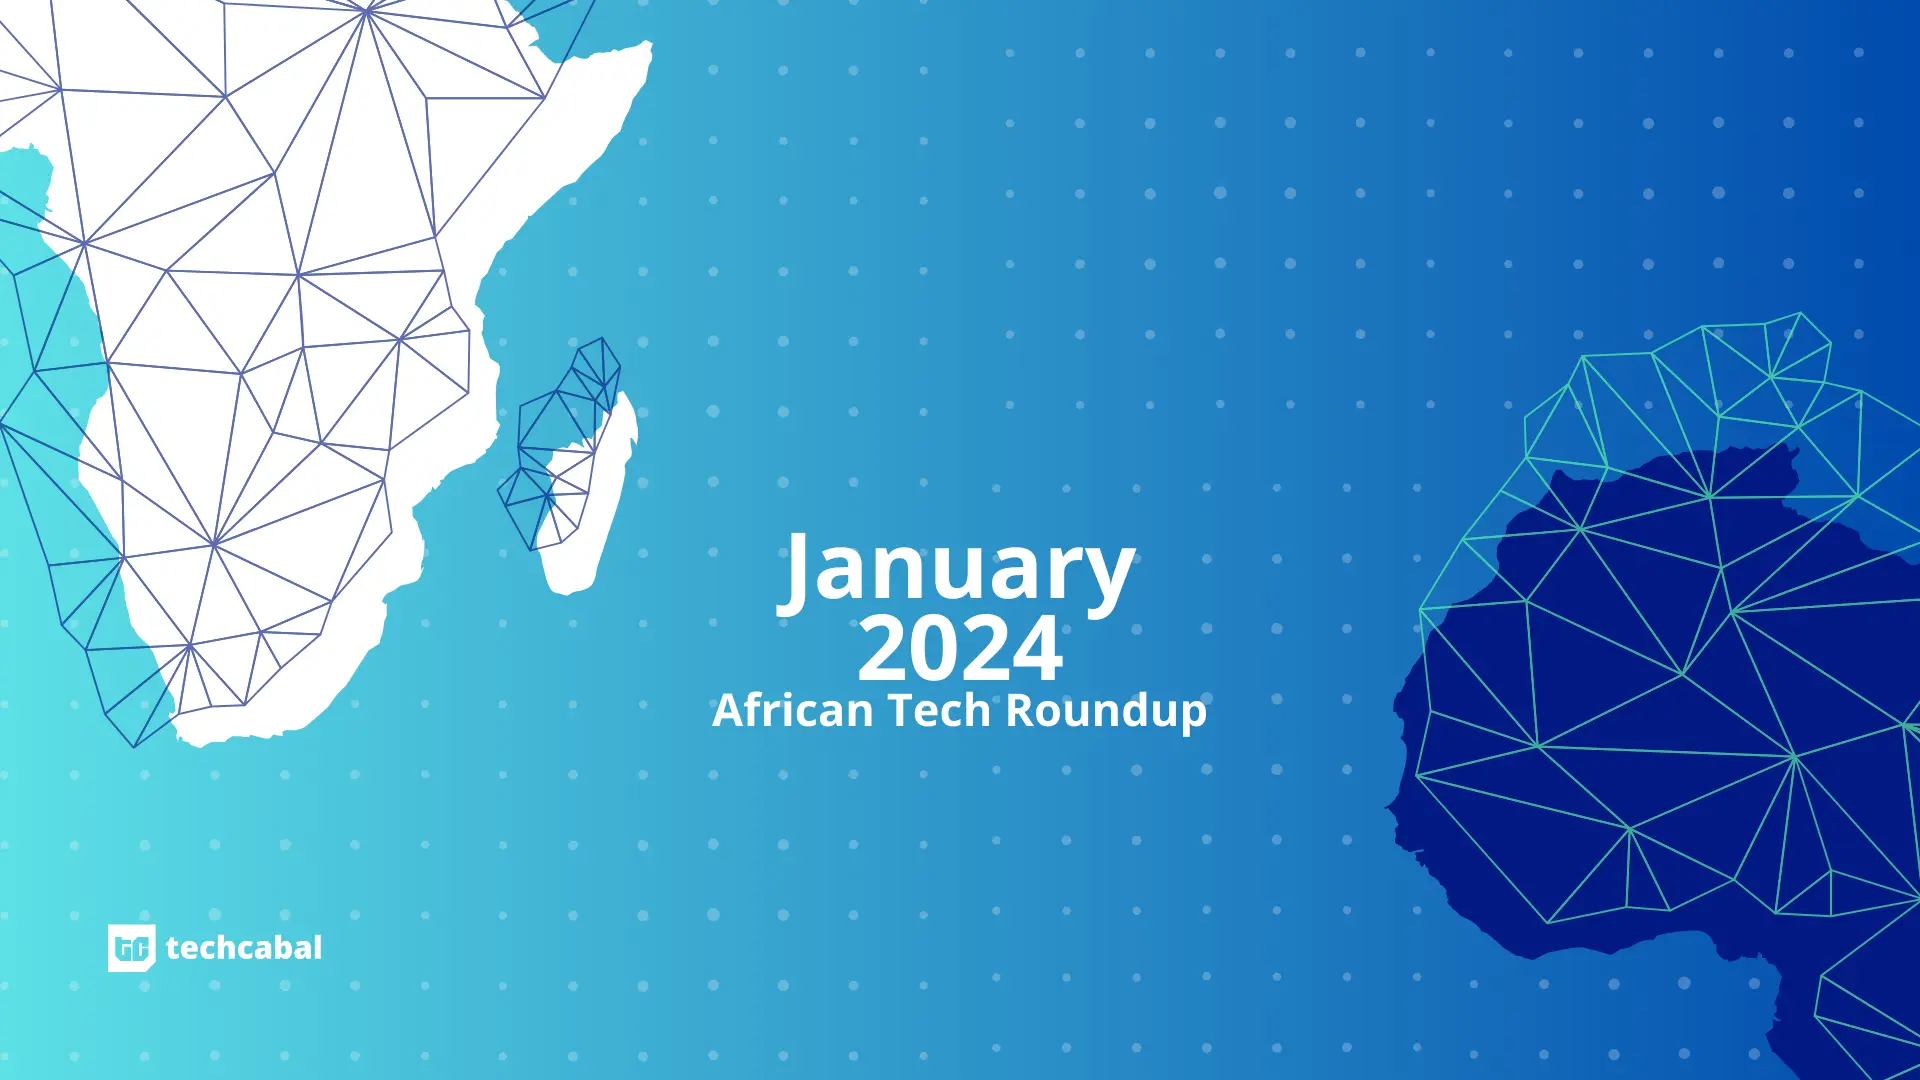 African startups raised $83 million in January 2024